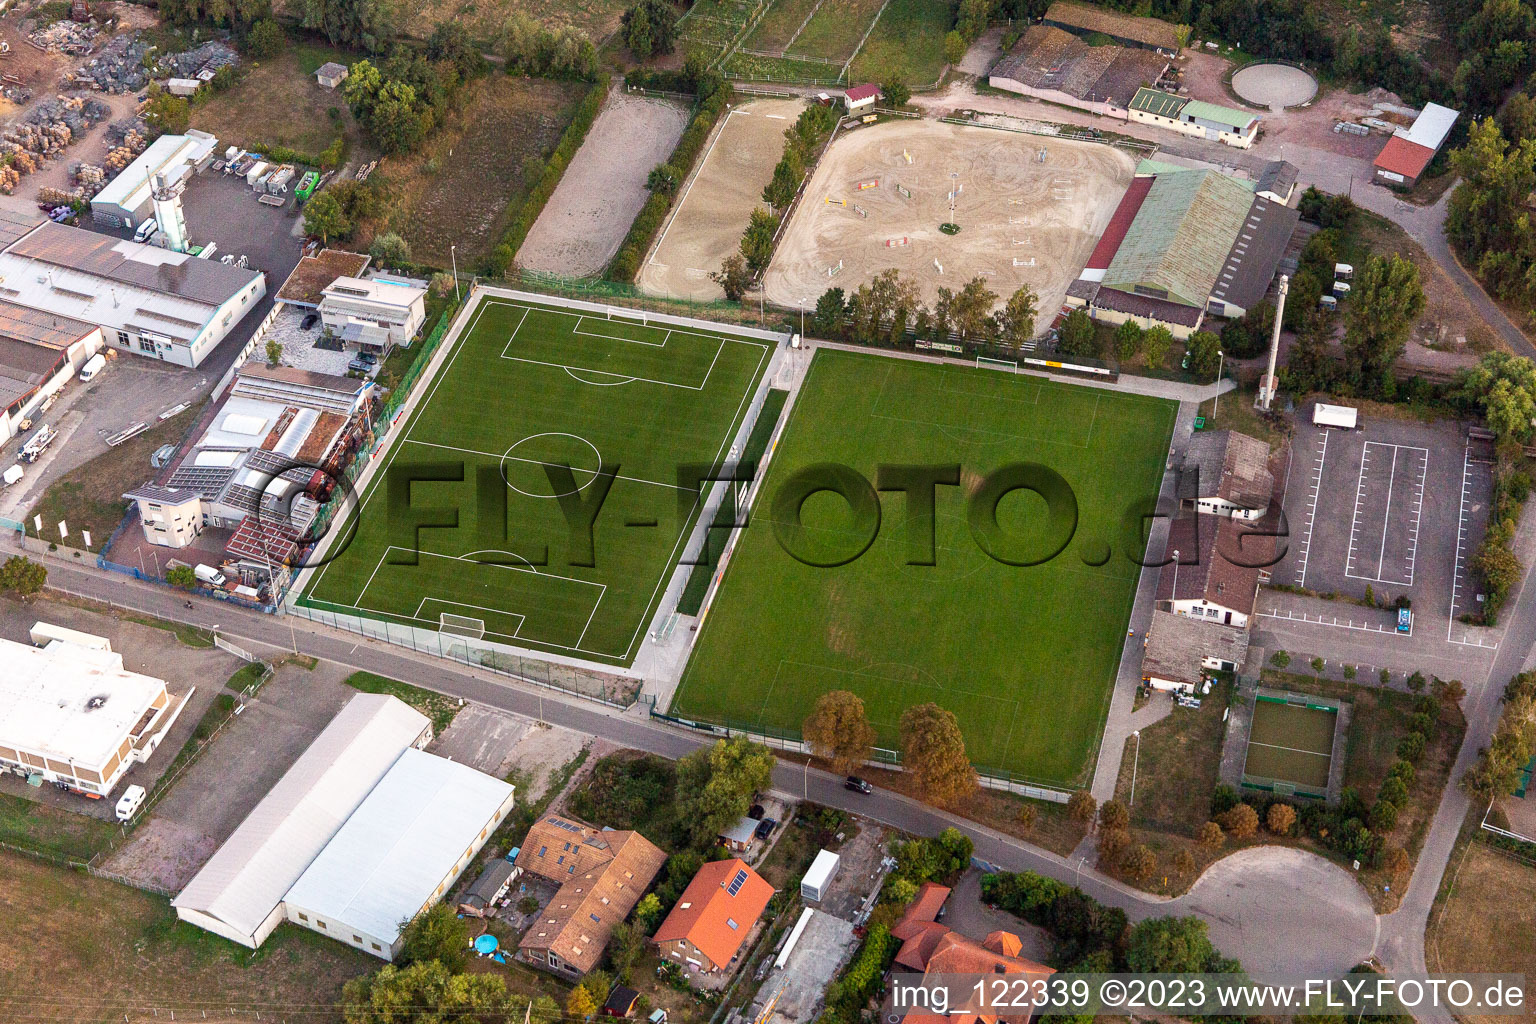 TSV Fortuna in the district Billigheim in Billigheim-Ingenheim in the state Rhineland-Palatinate, Germany